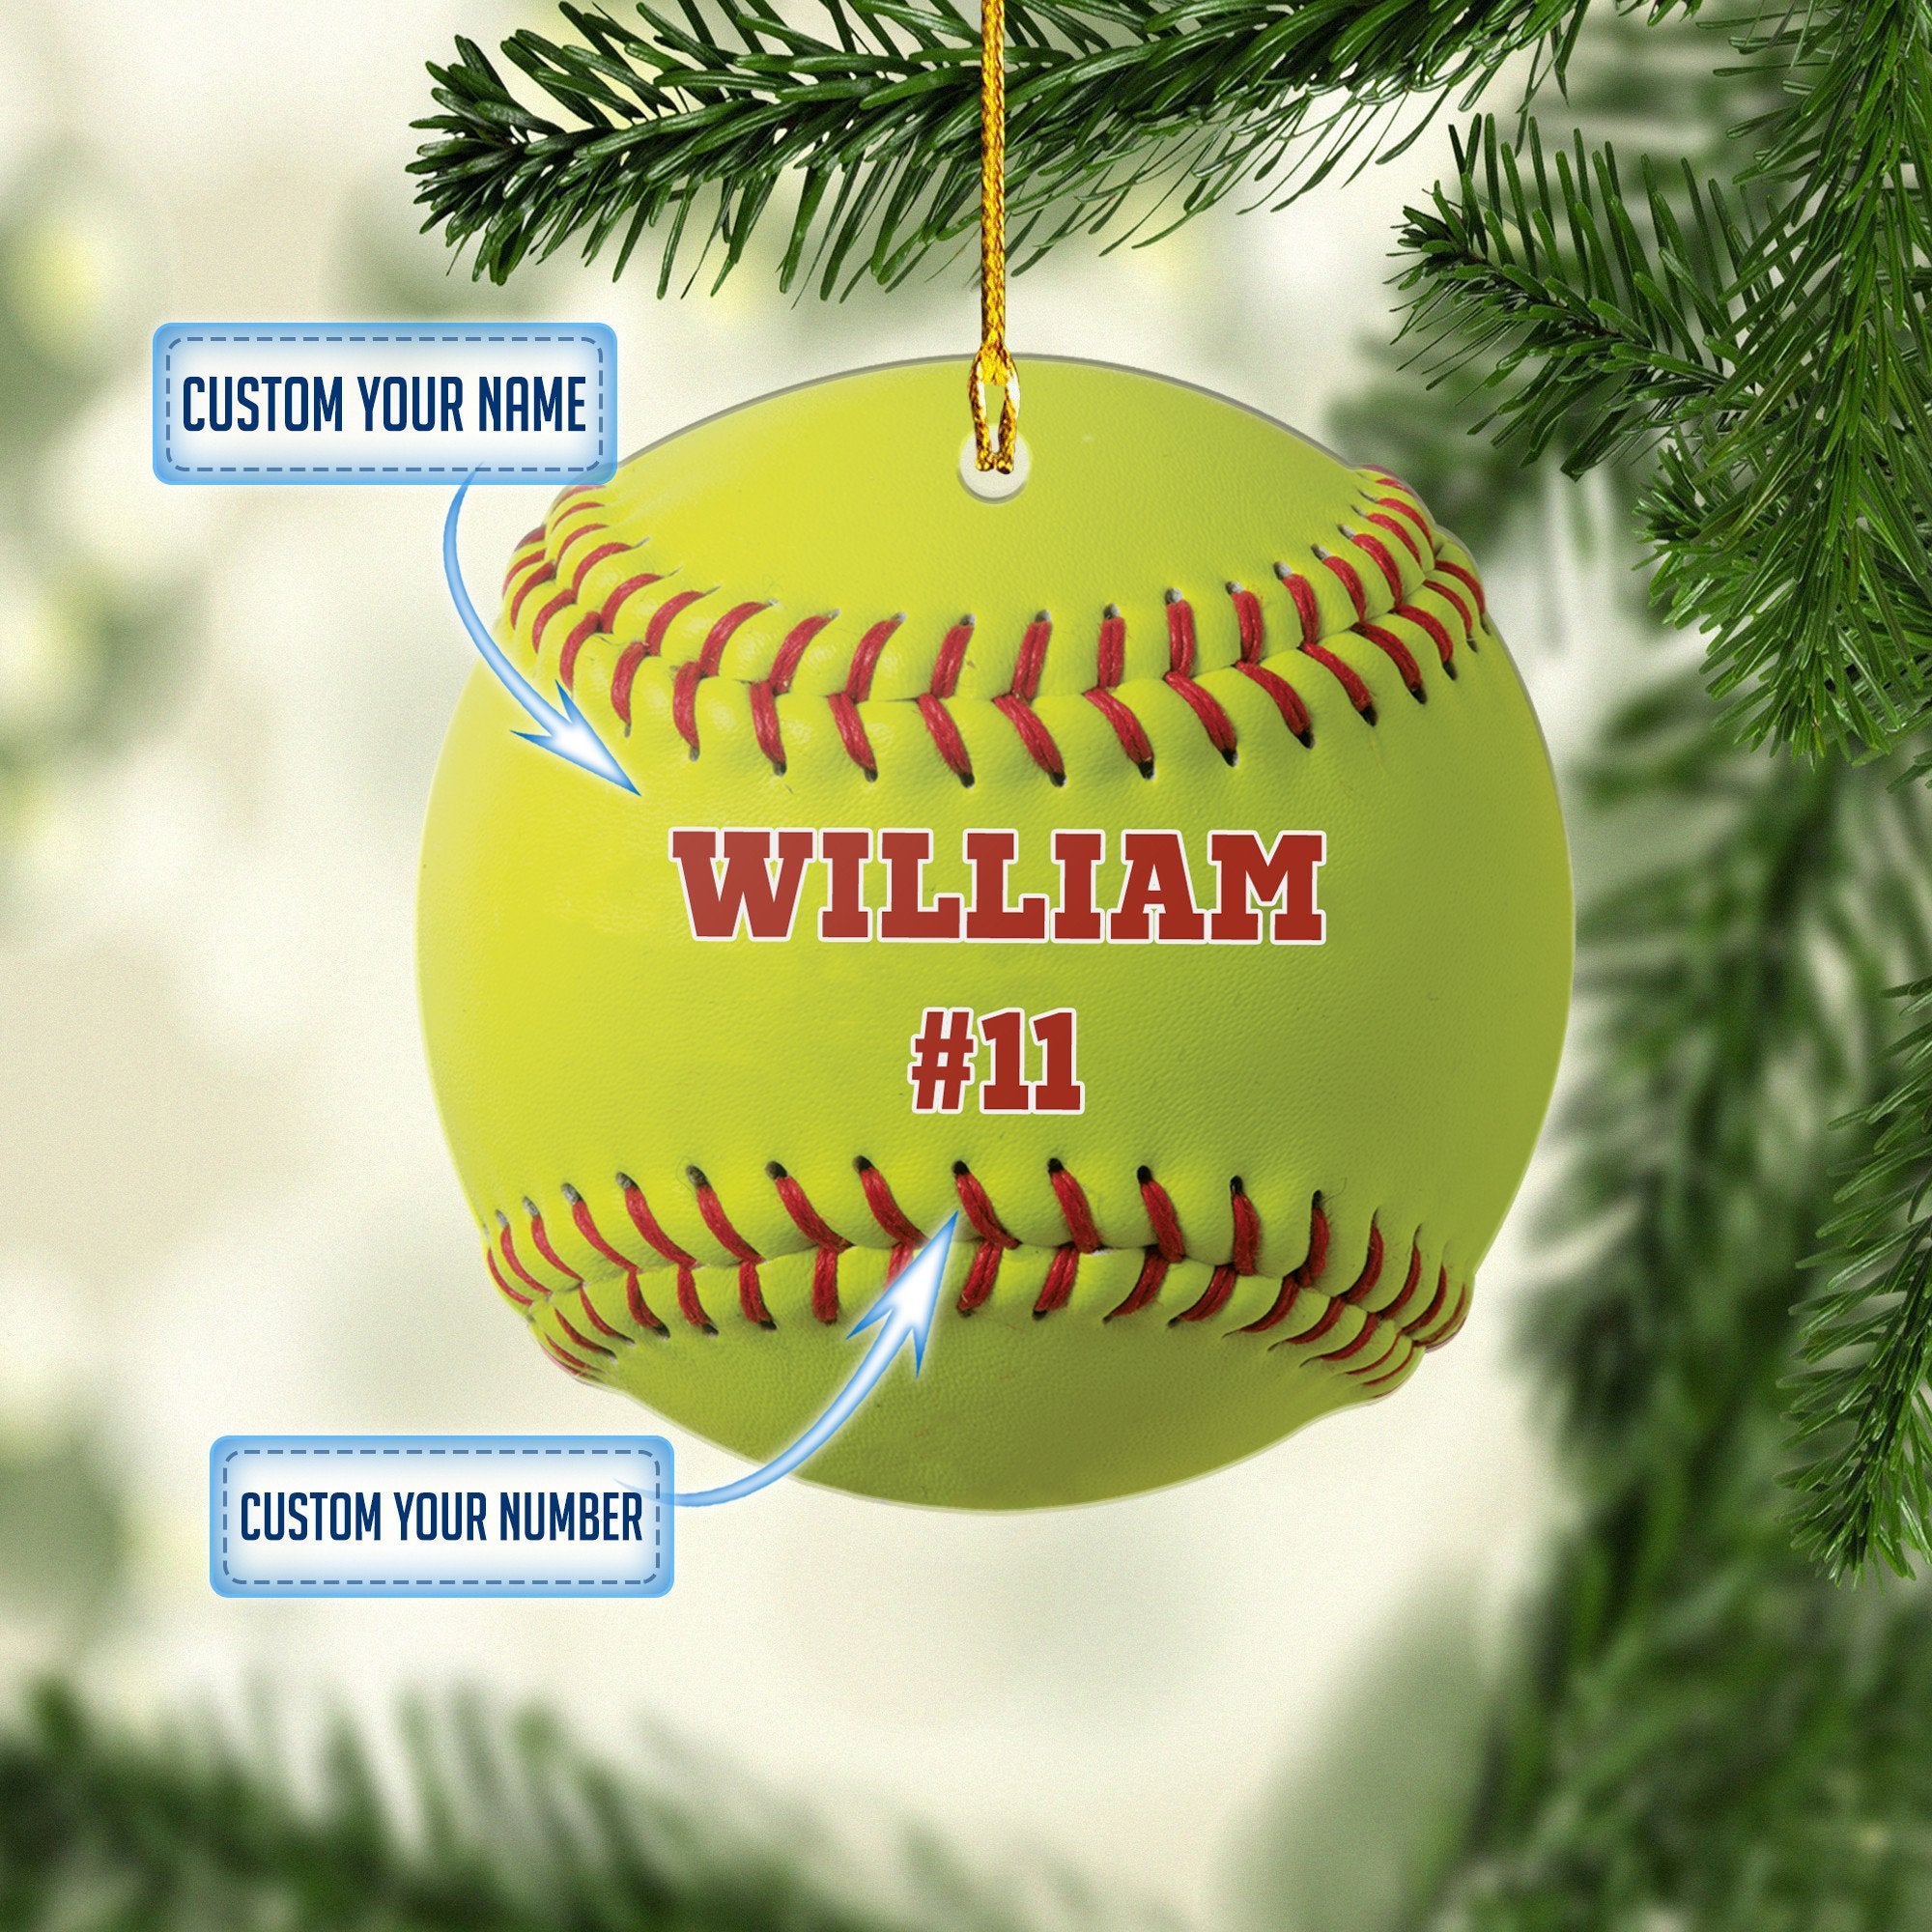 Personalized Name Number Softball Ball Christmas Ornaments/ Gift for Softball Player